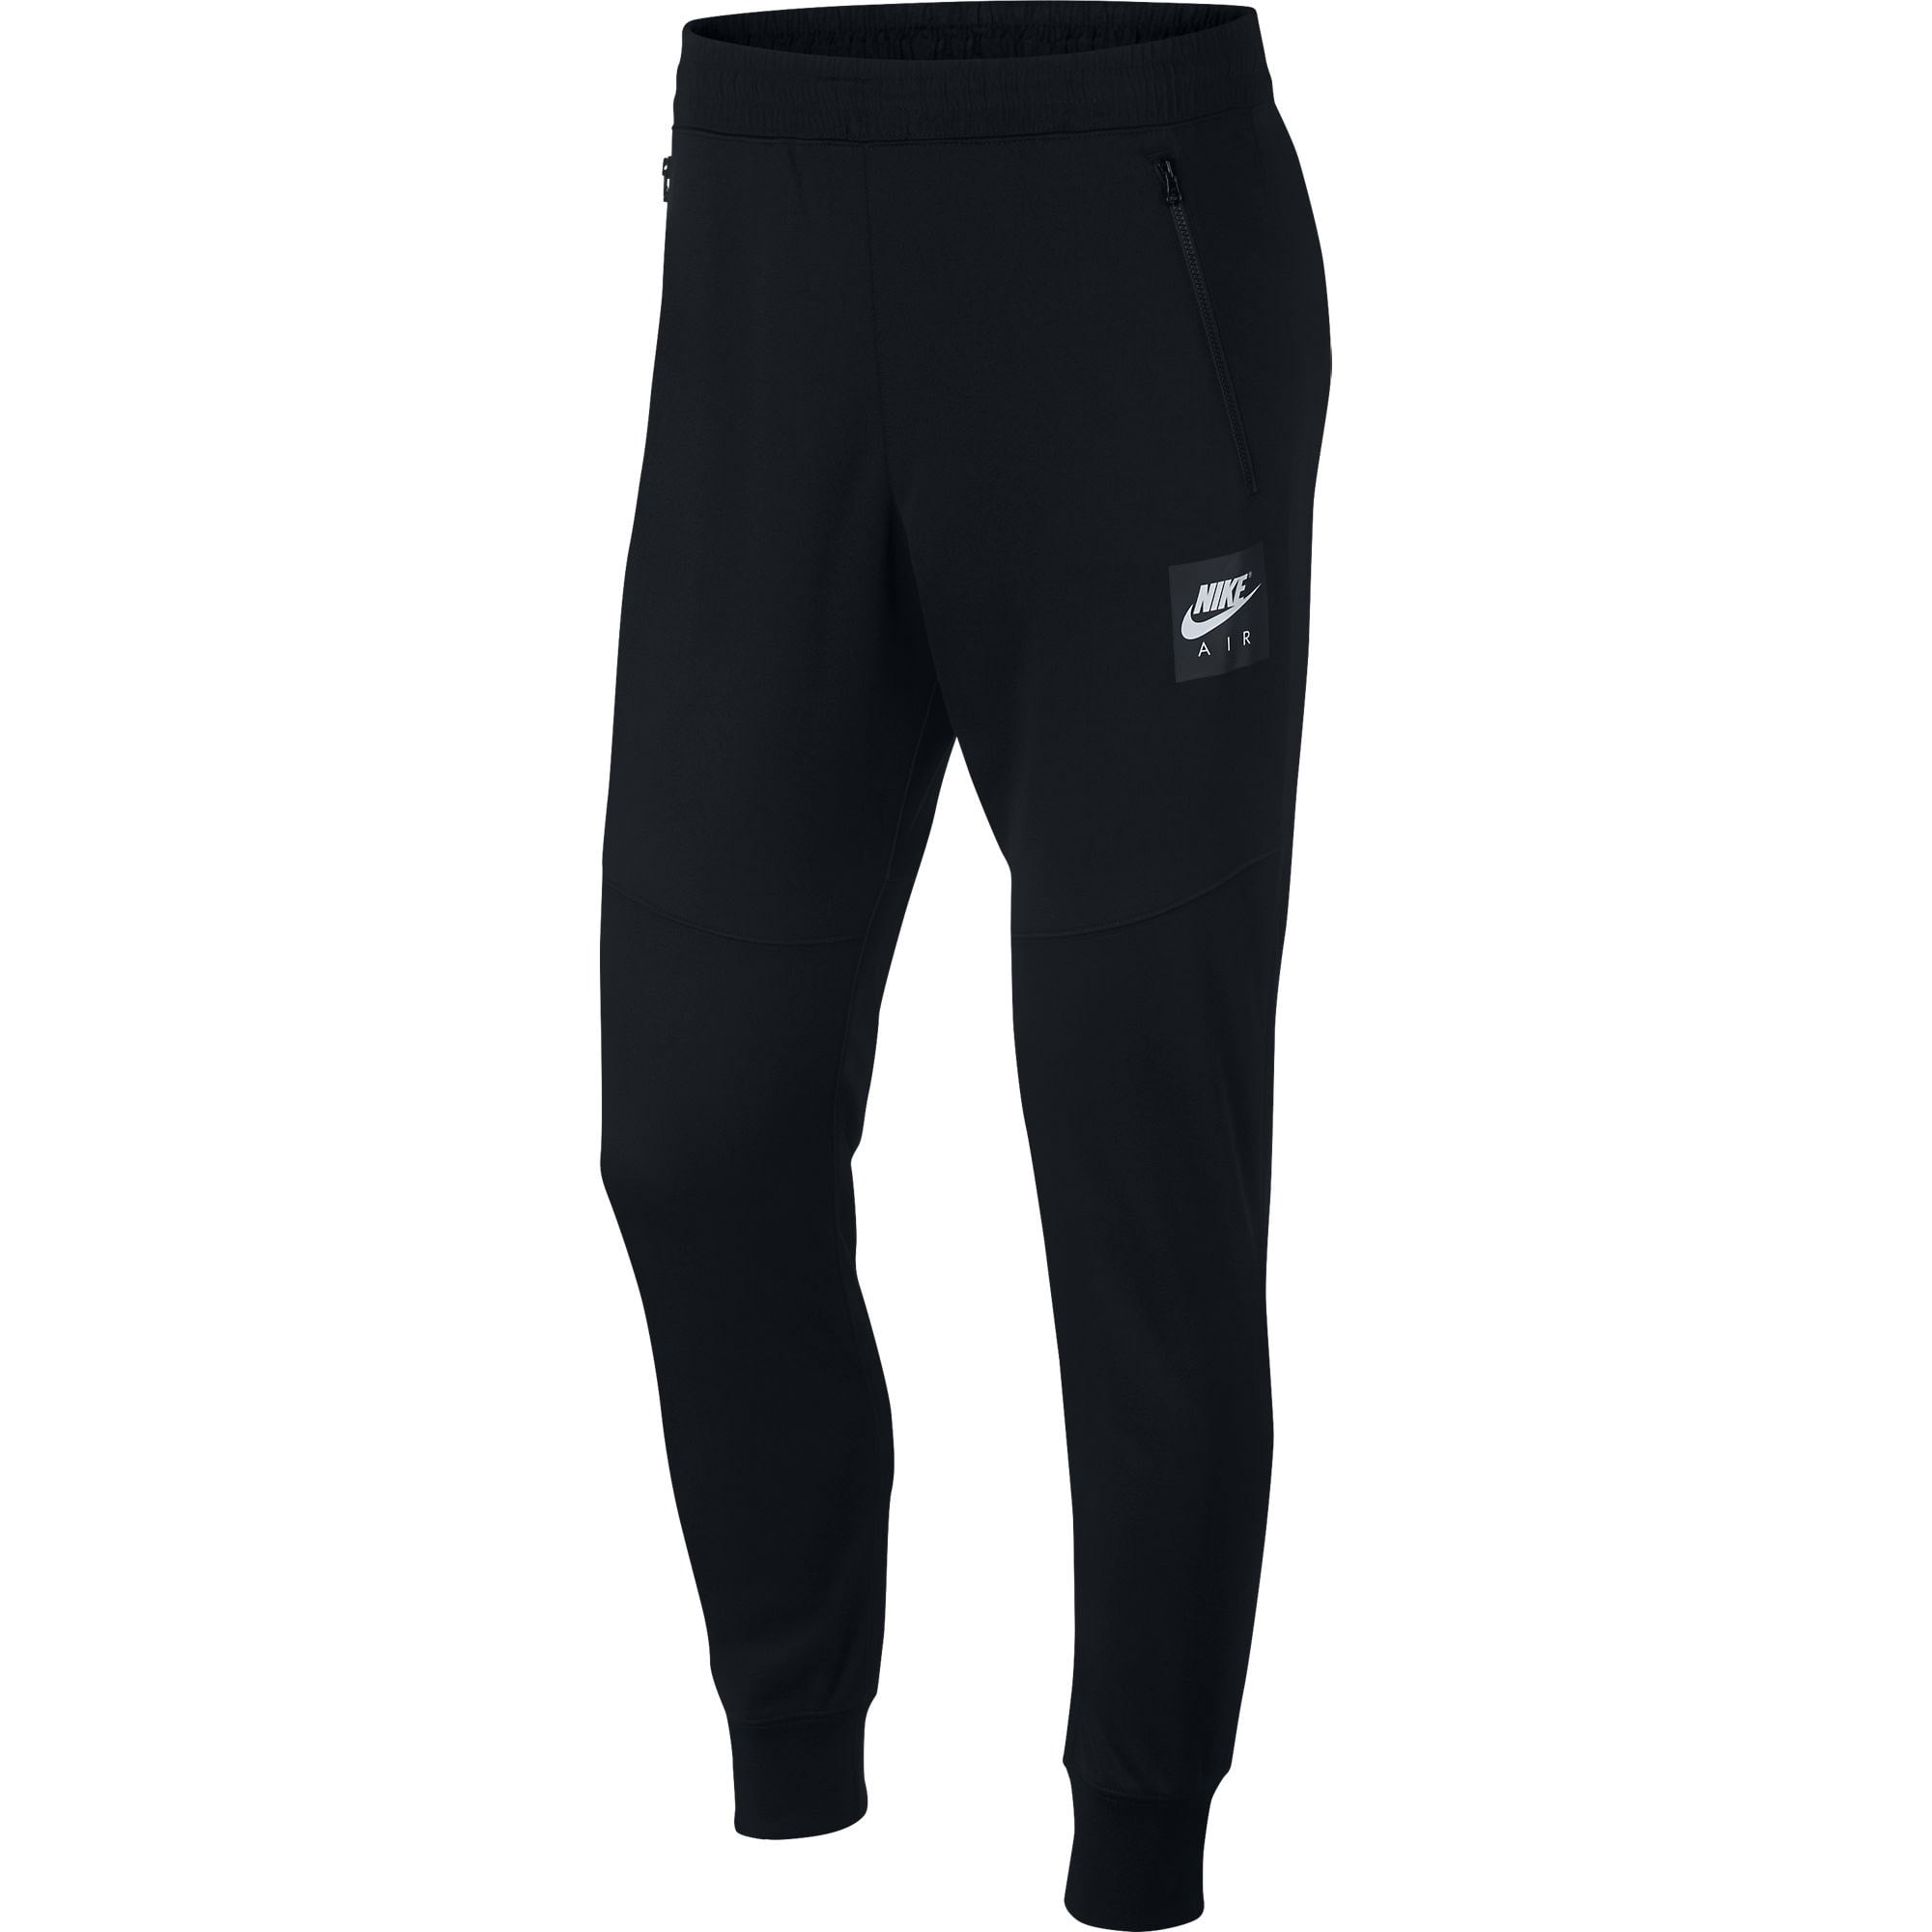 Nike Sportswear Air Jordan Men's Track Pants Black 918326-011 - Walmart.com